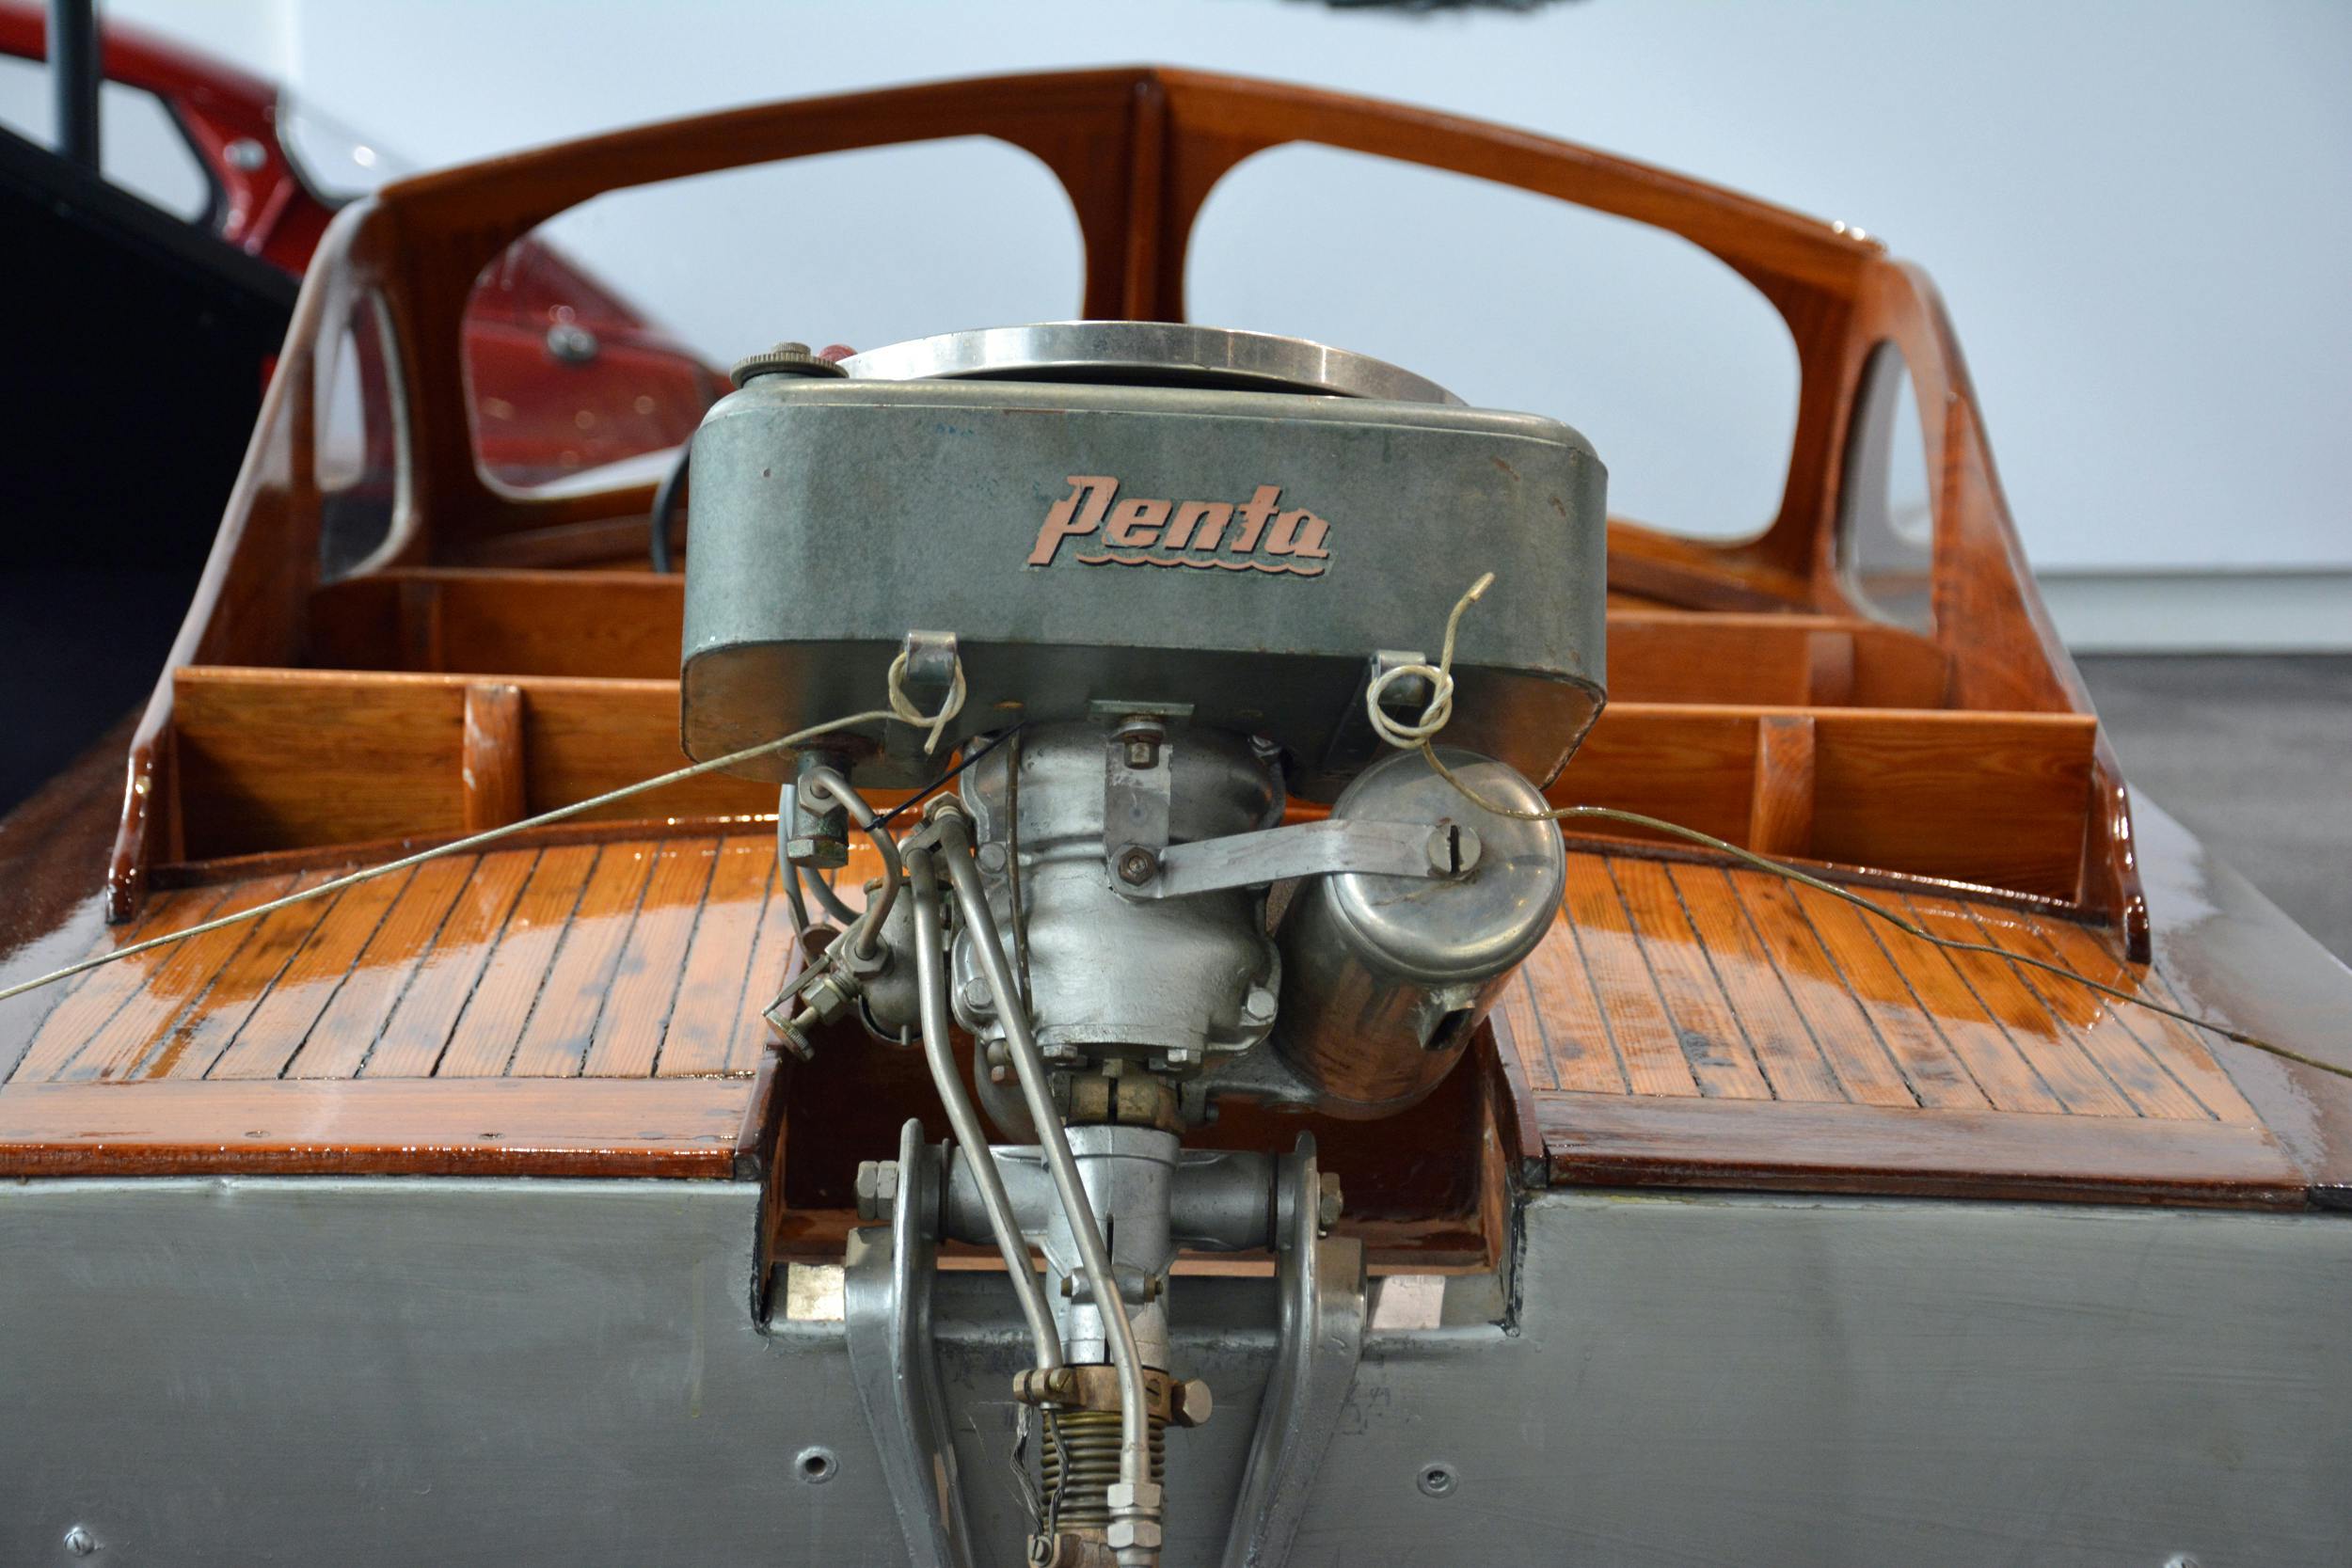 Saab Museum Penta engine rear view